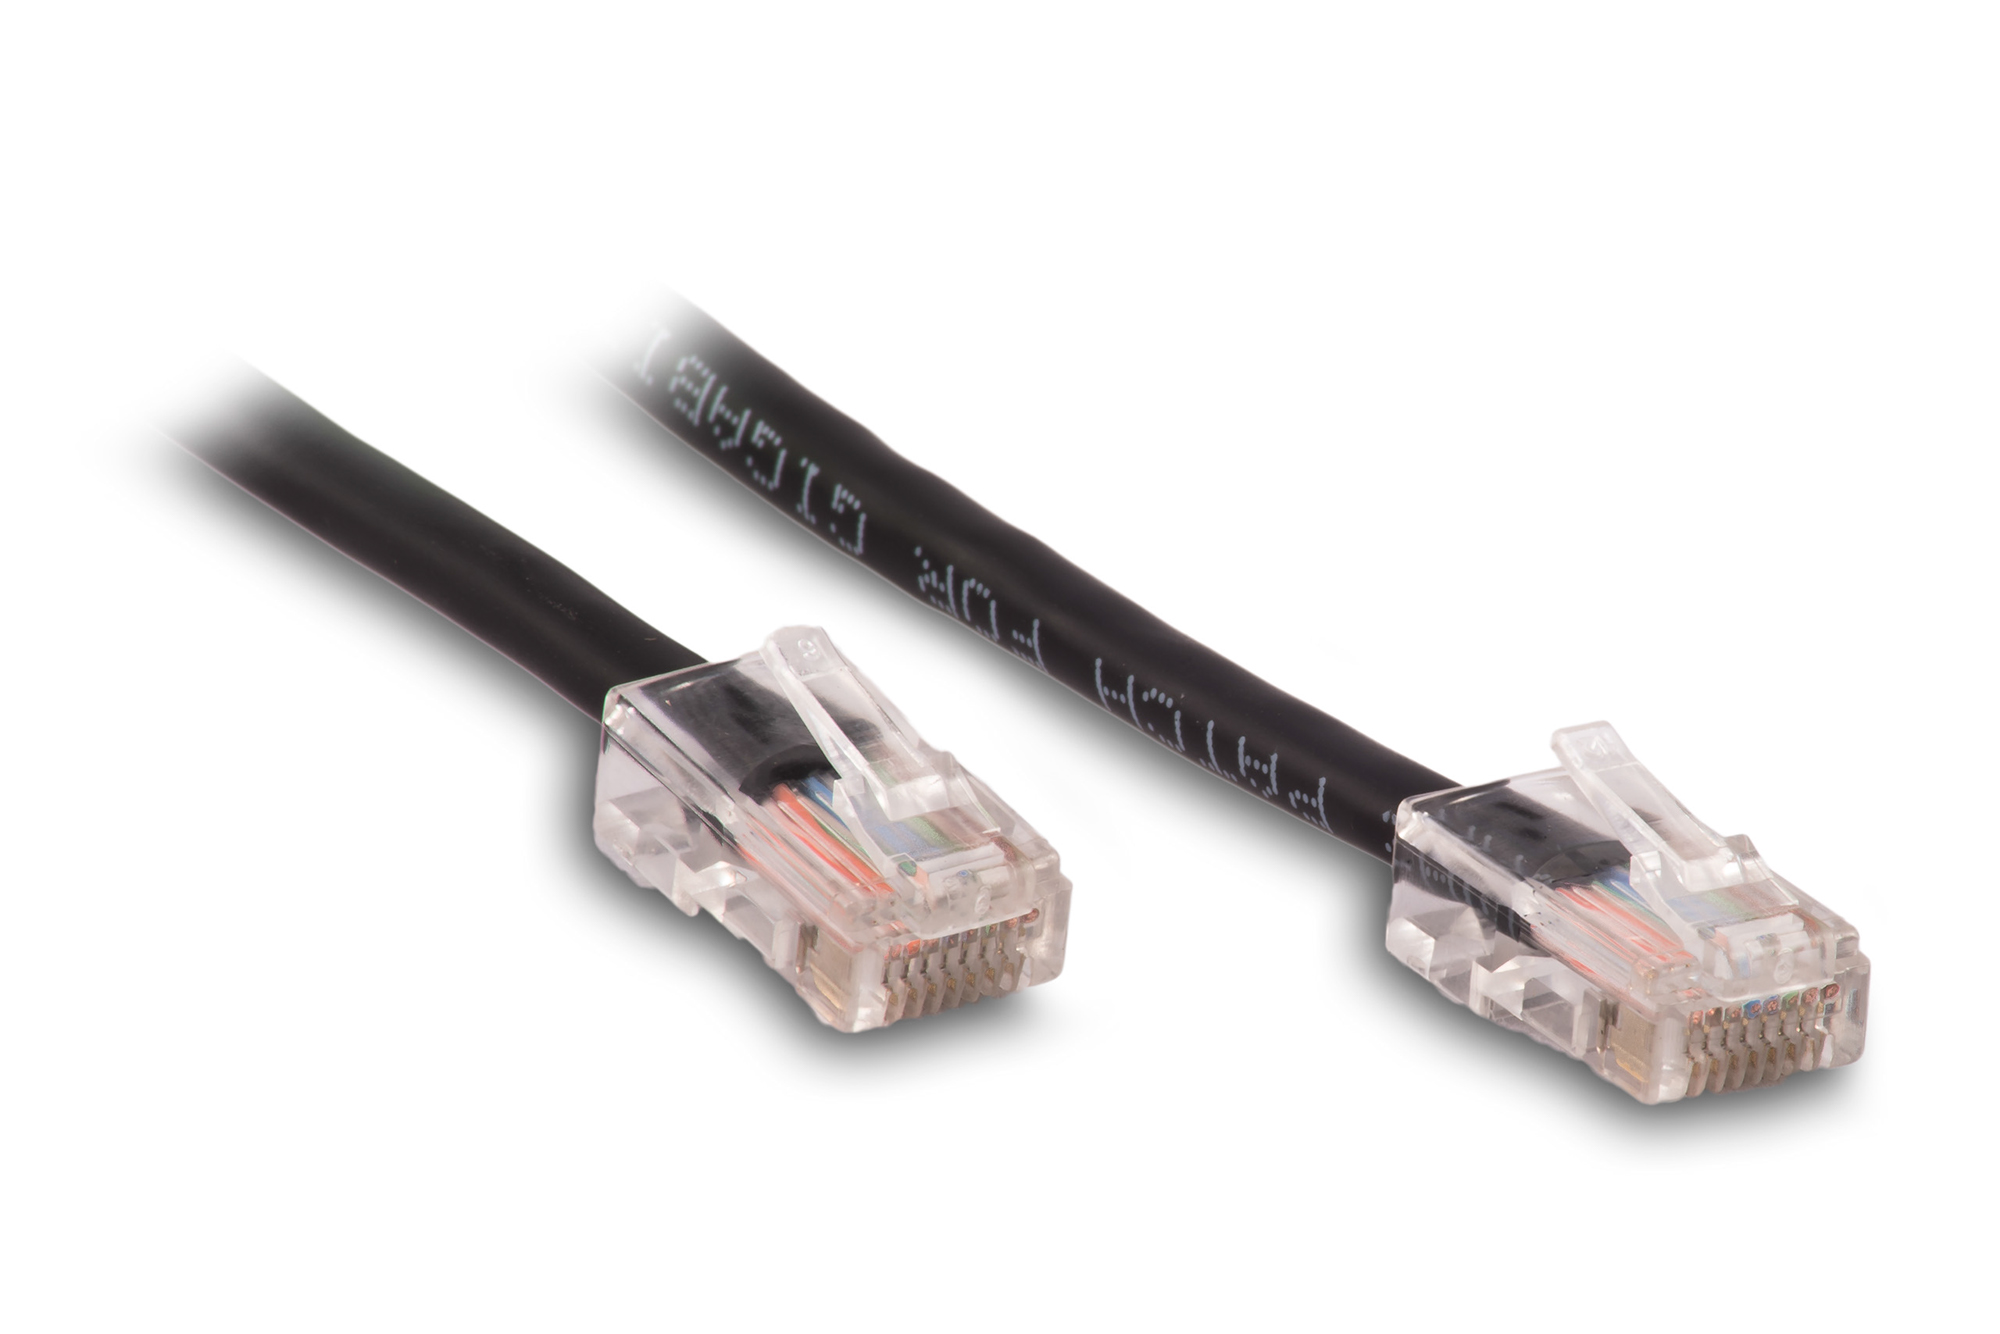 5 foot COPPER Cable Cat5 Cat5e Patch Cord Ethernet LAN YouPick Color *NOT CC A* 